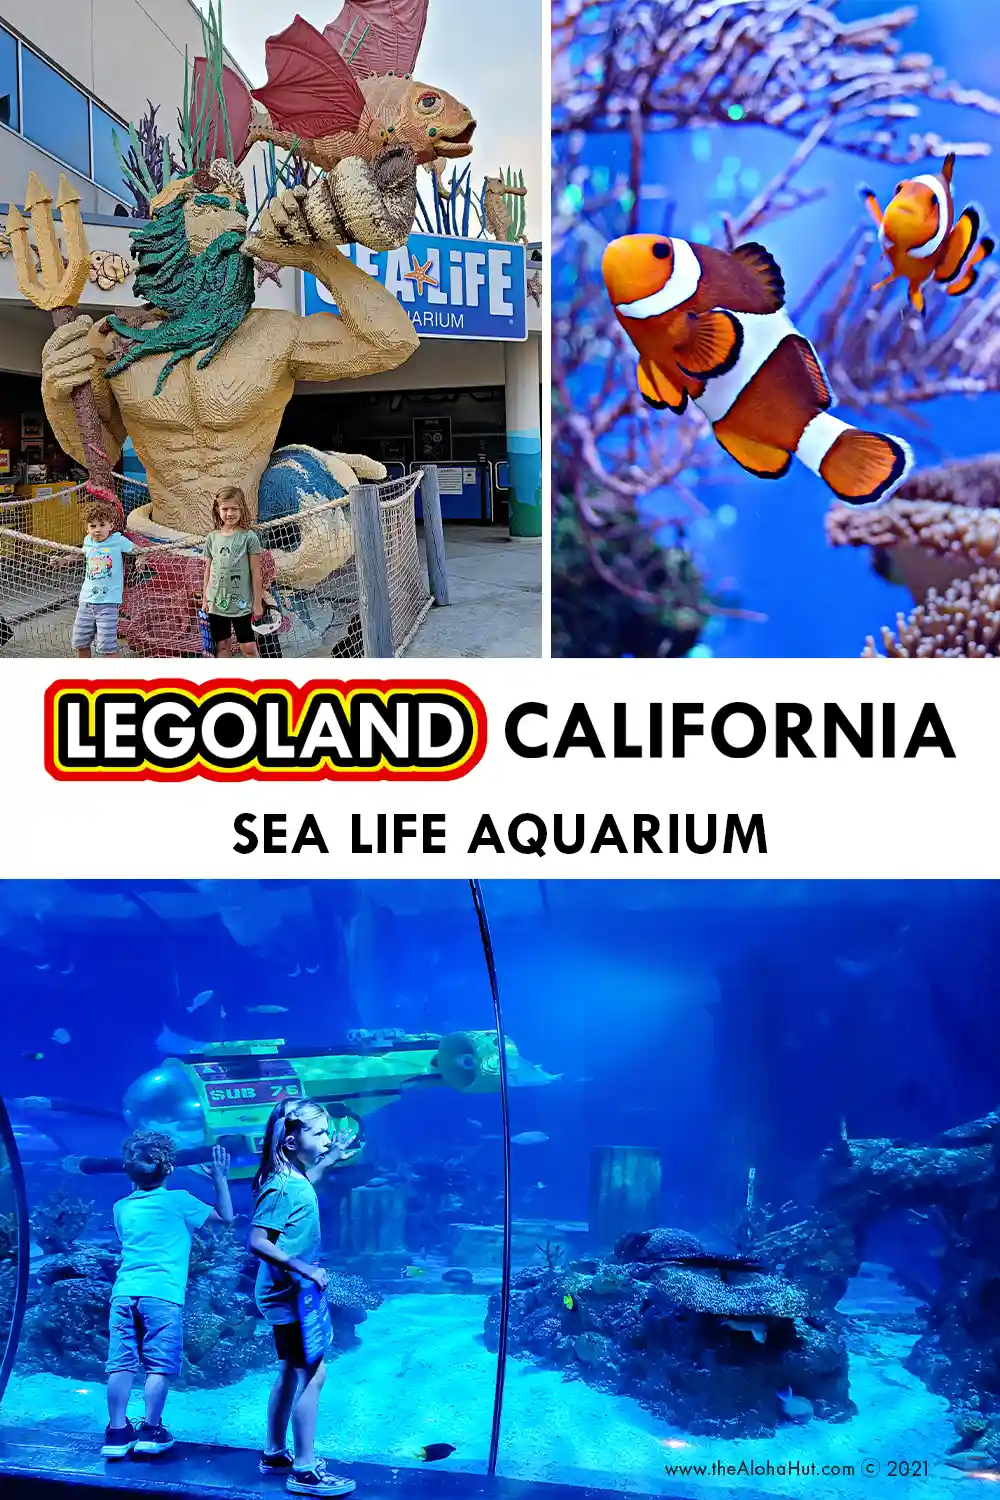 Legoland California - A Complete Guide for Families - tips & tricks - Sea Life Aquarium